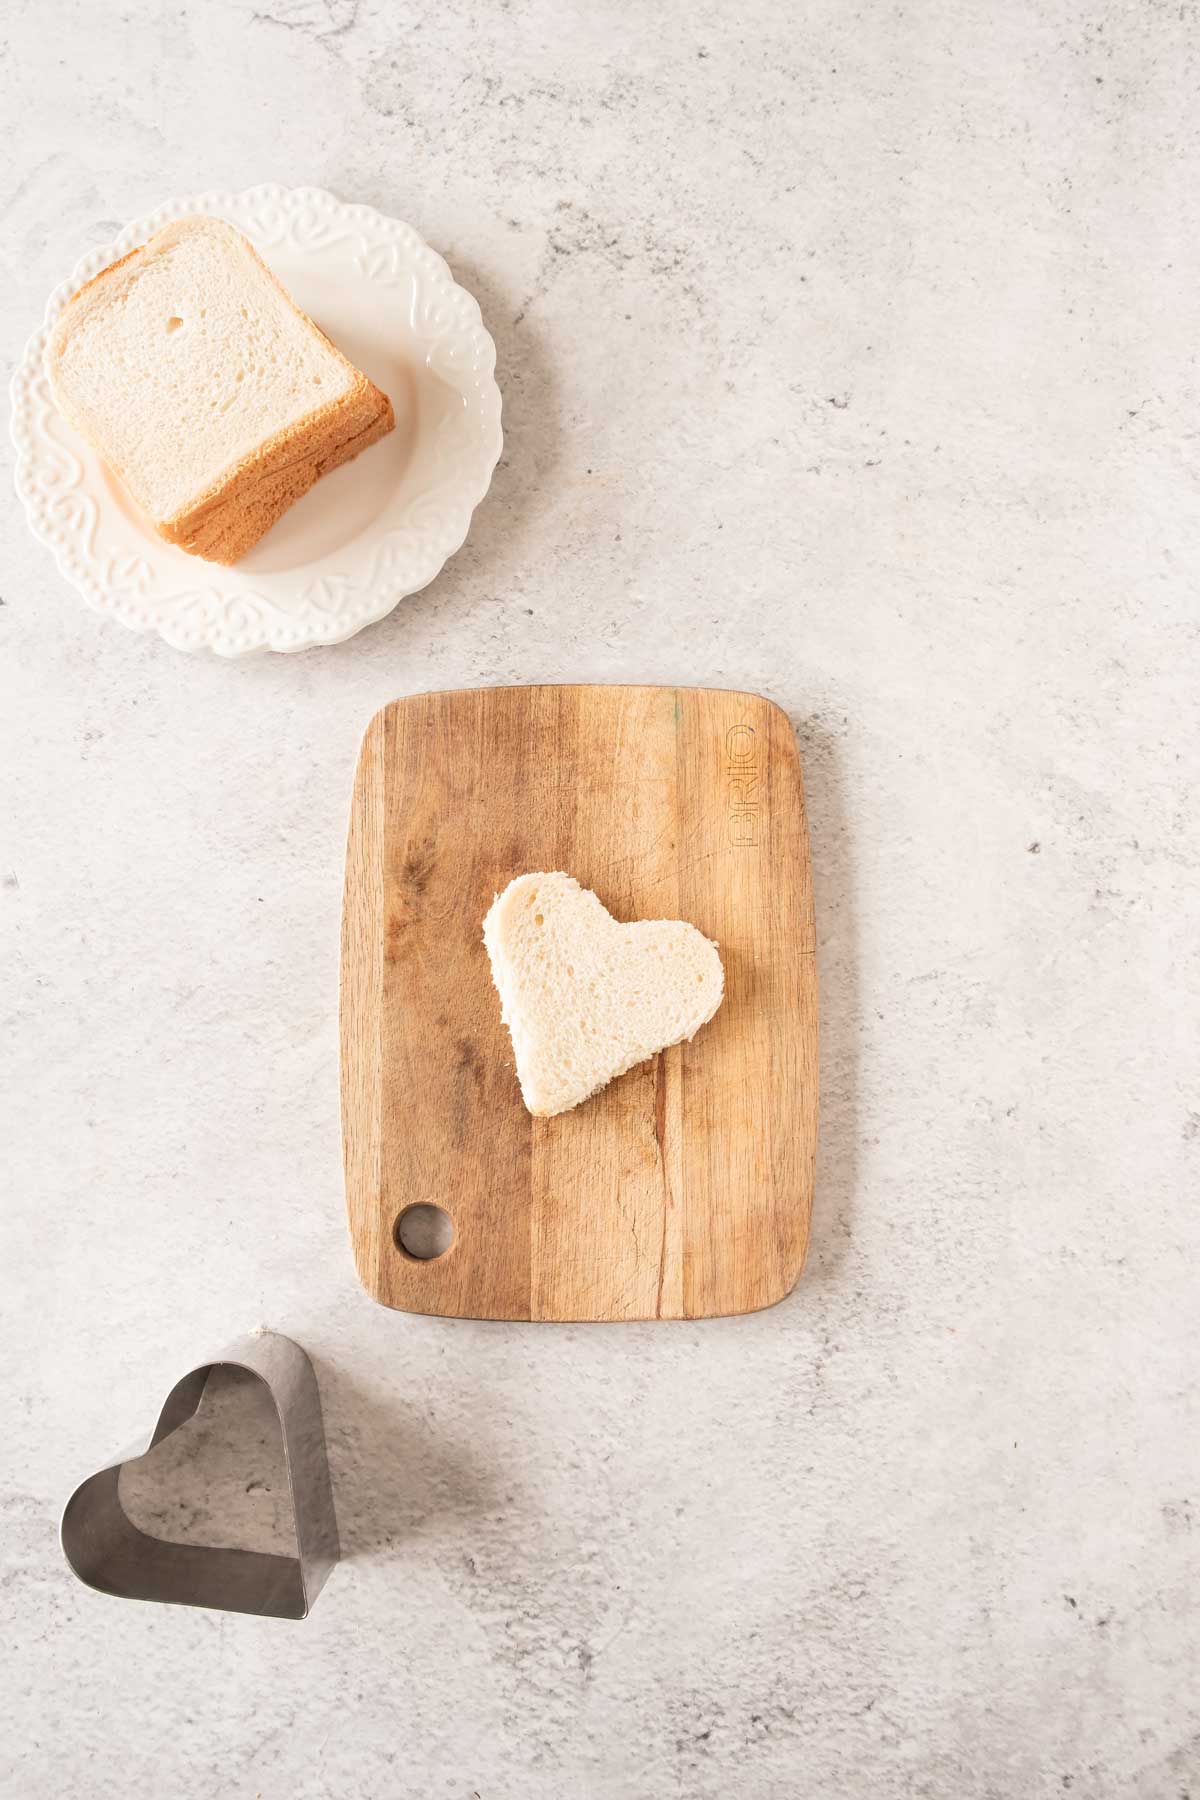 Heart shaped bread on a cutting board.